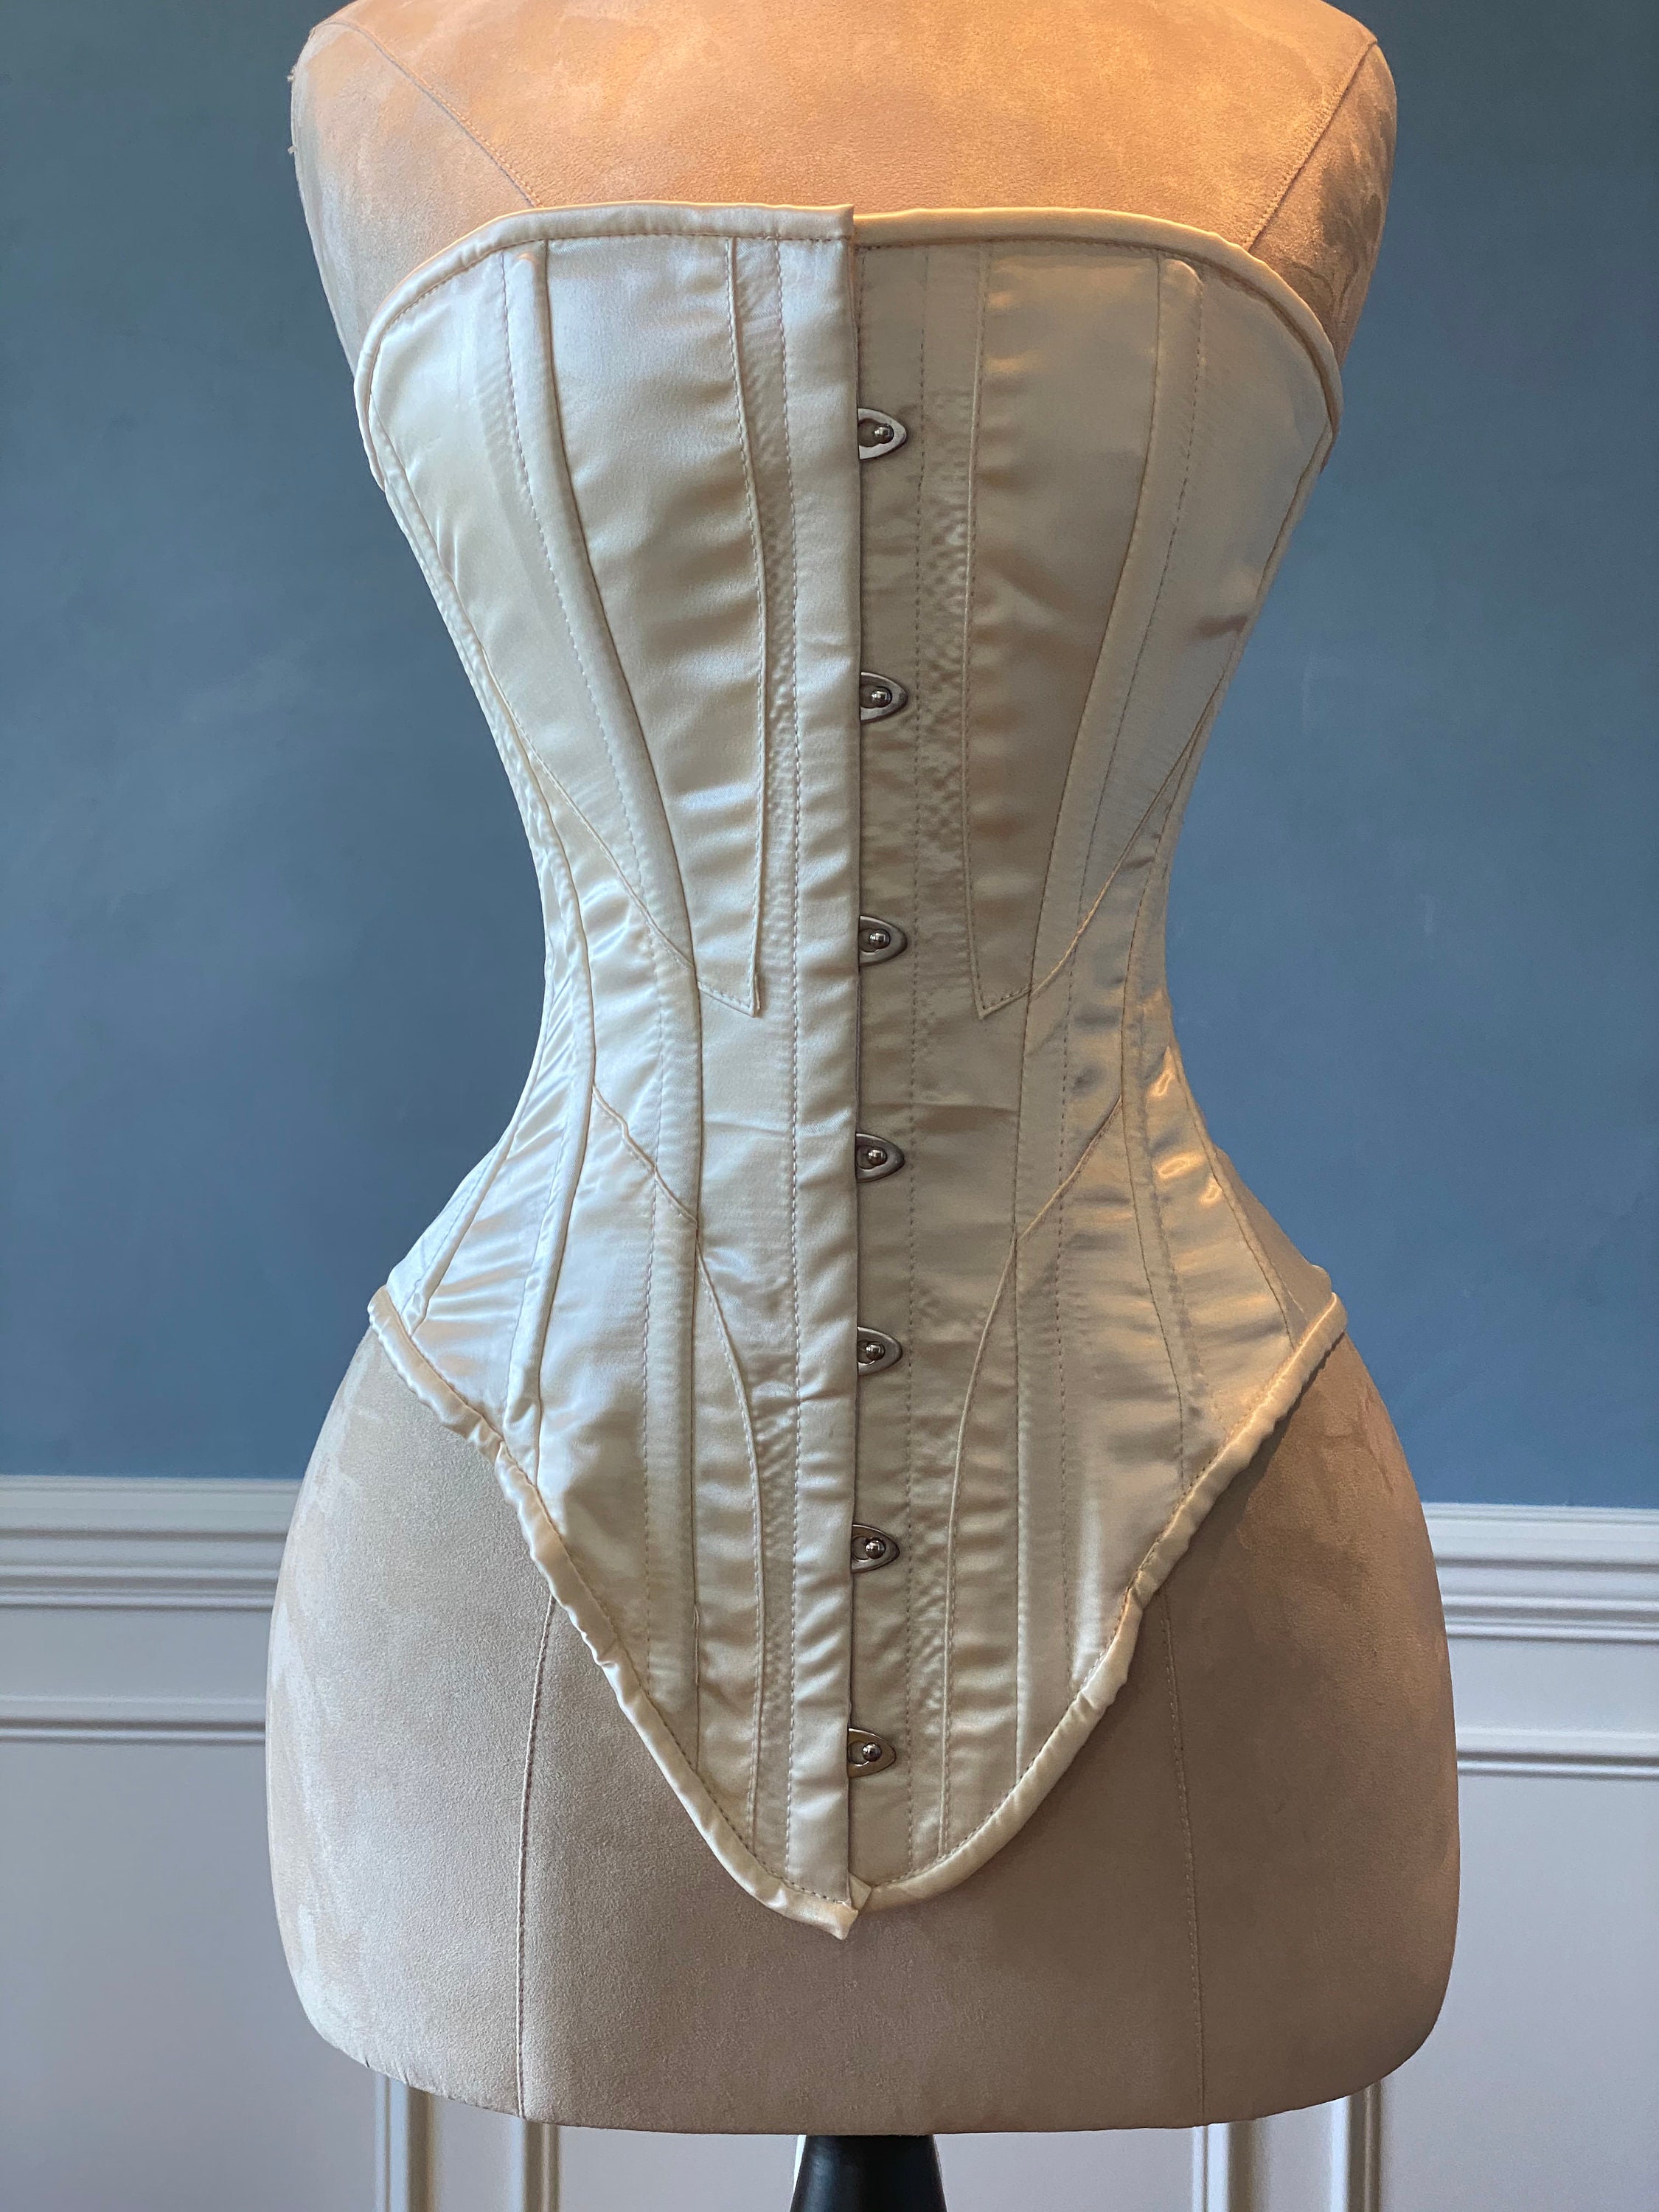 Late Edwardian corset 1910s - Custom order